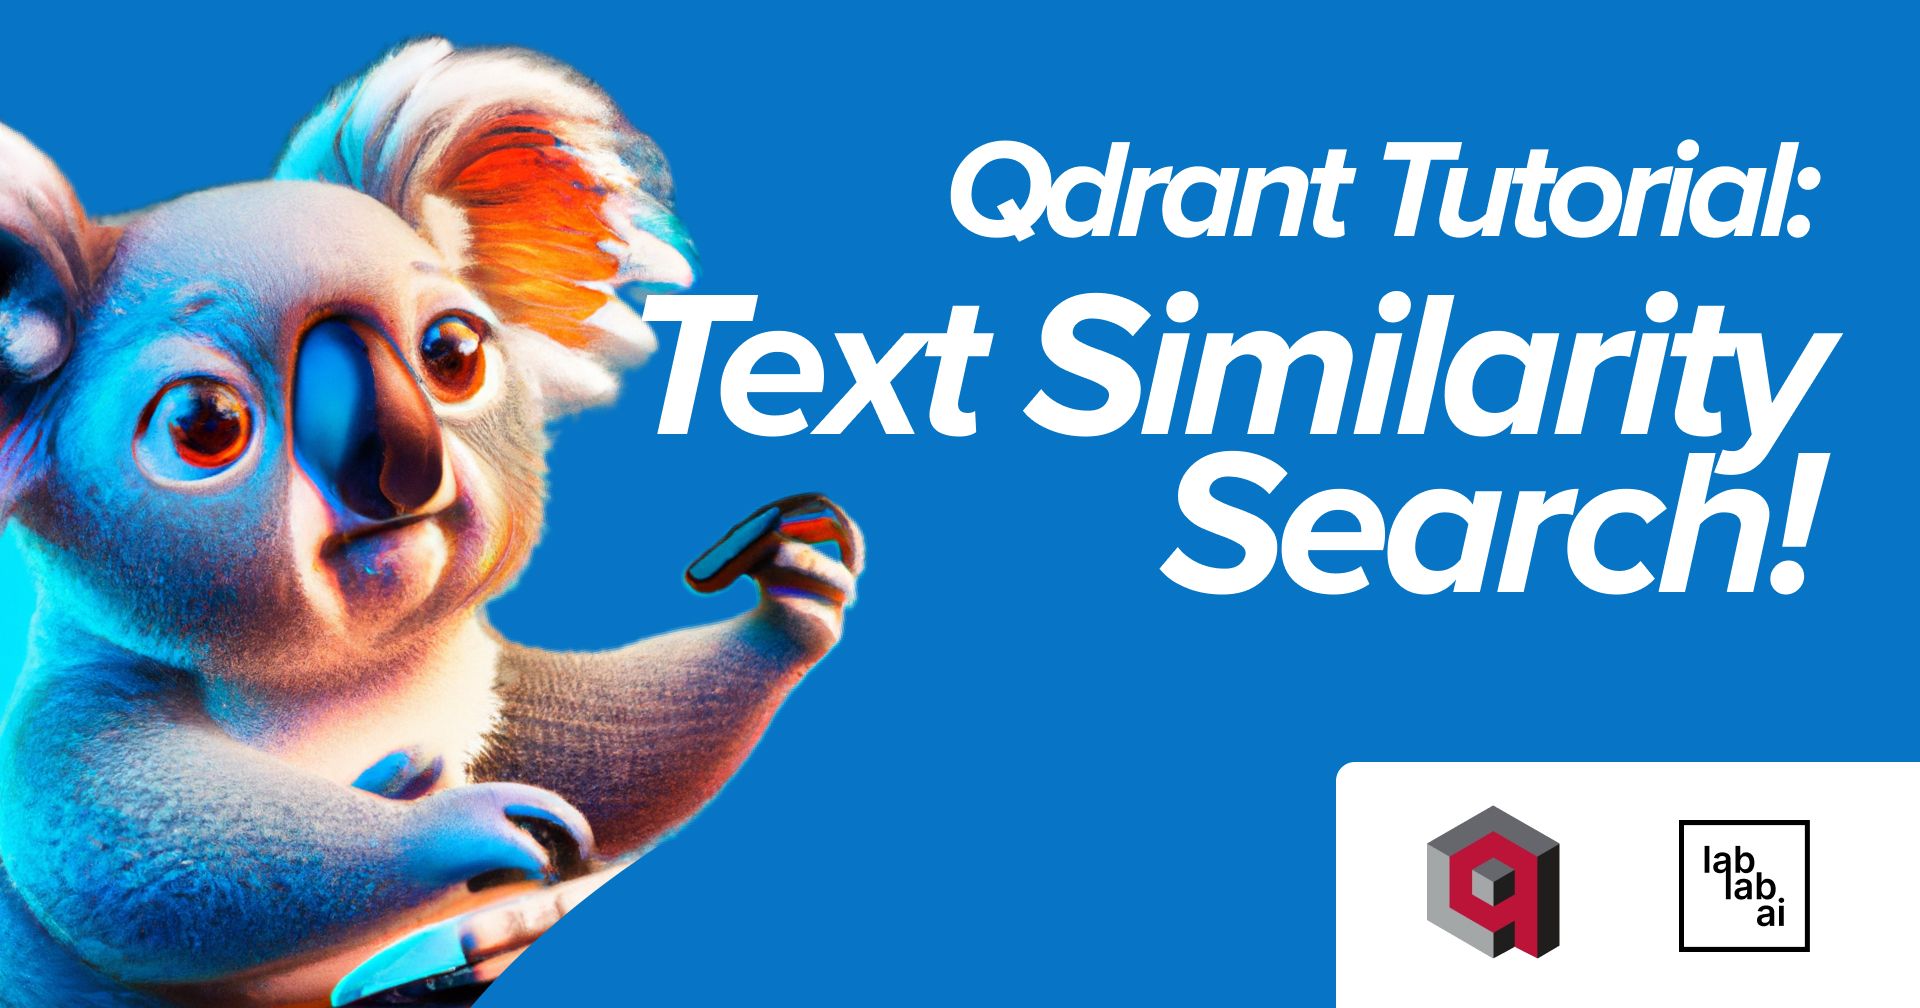 Qdrant Tutorial: Text Similarity Search